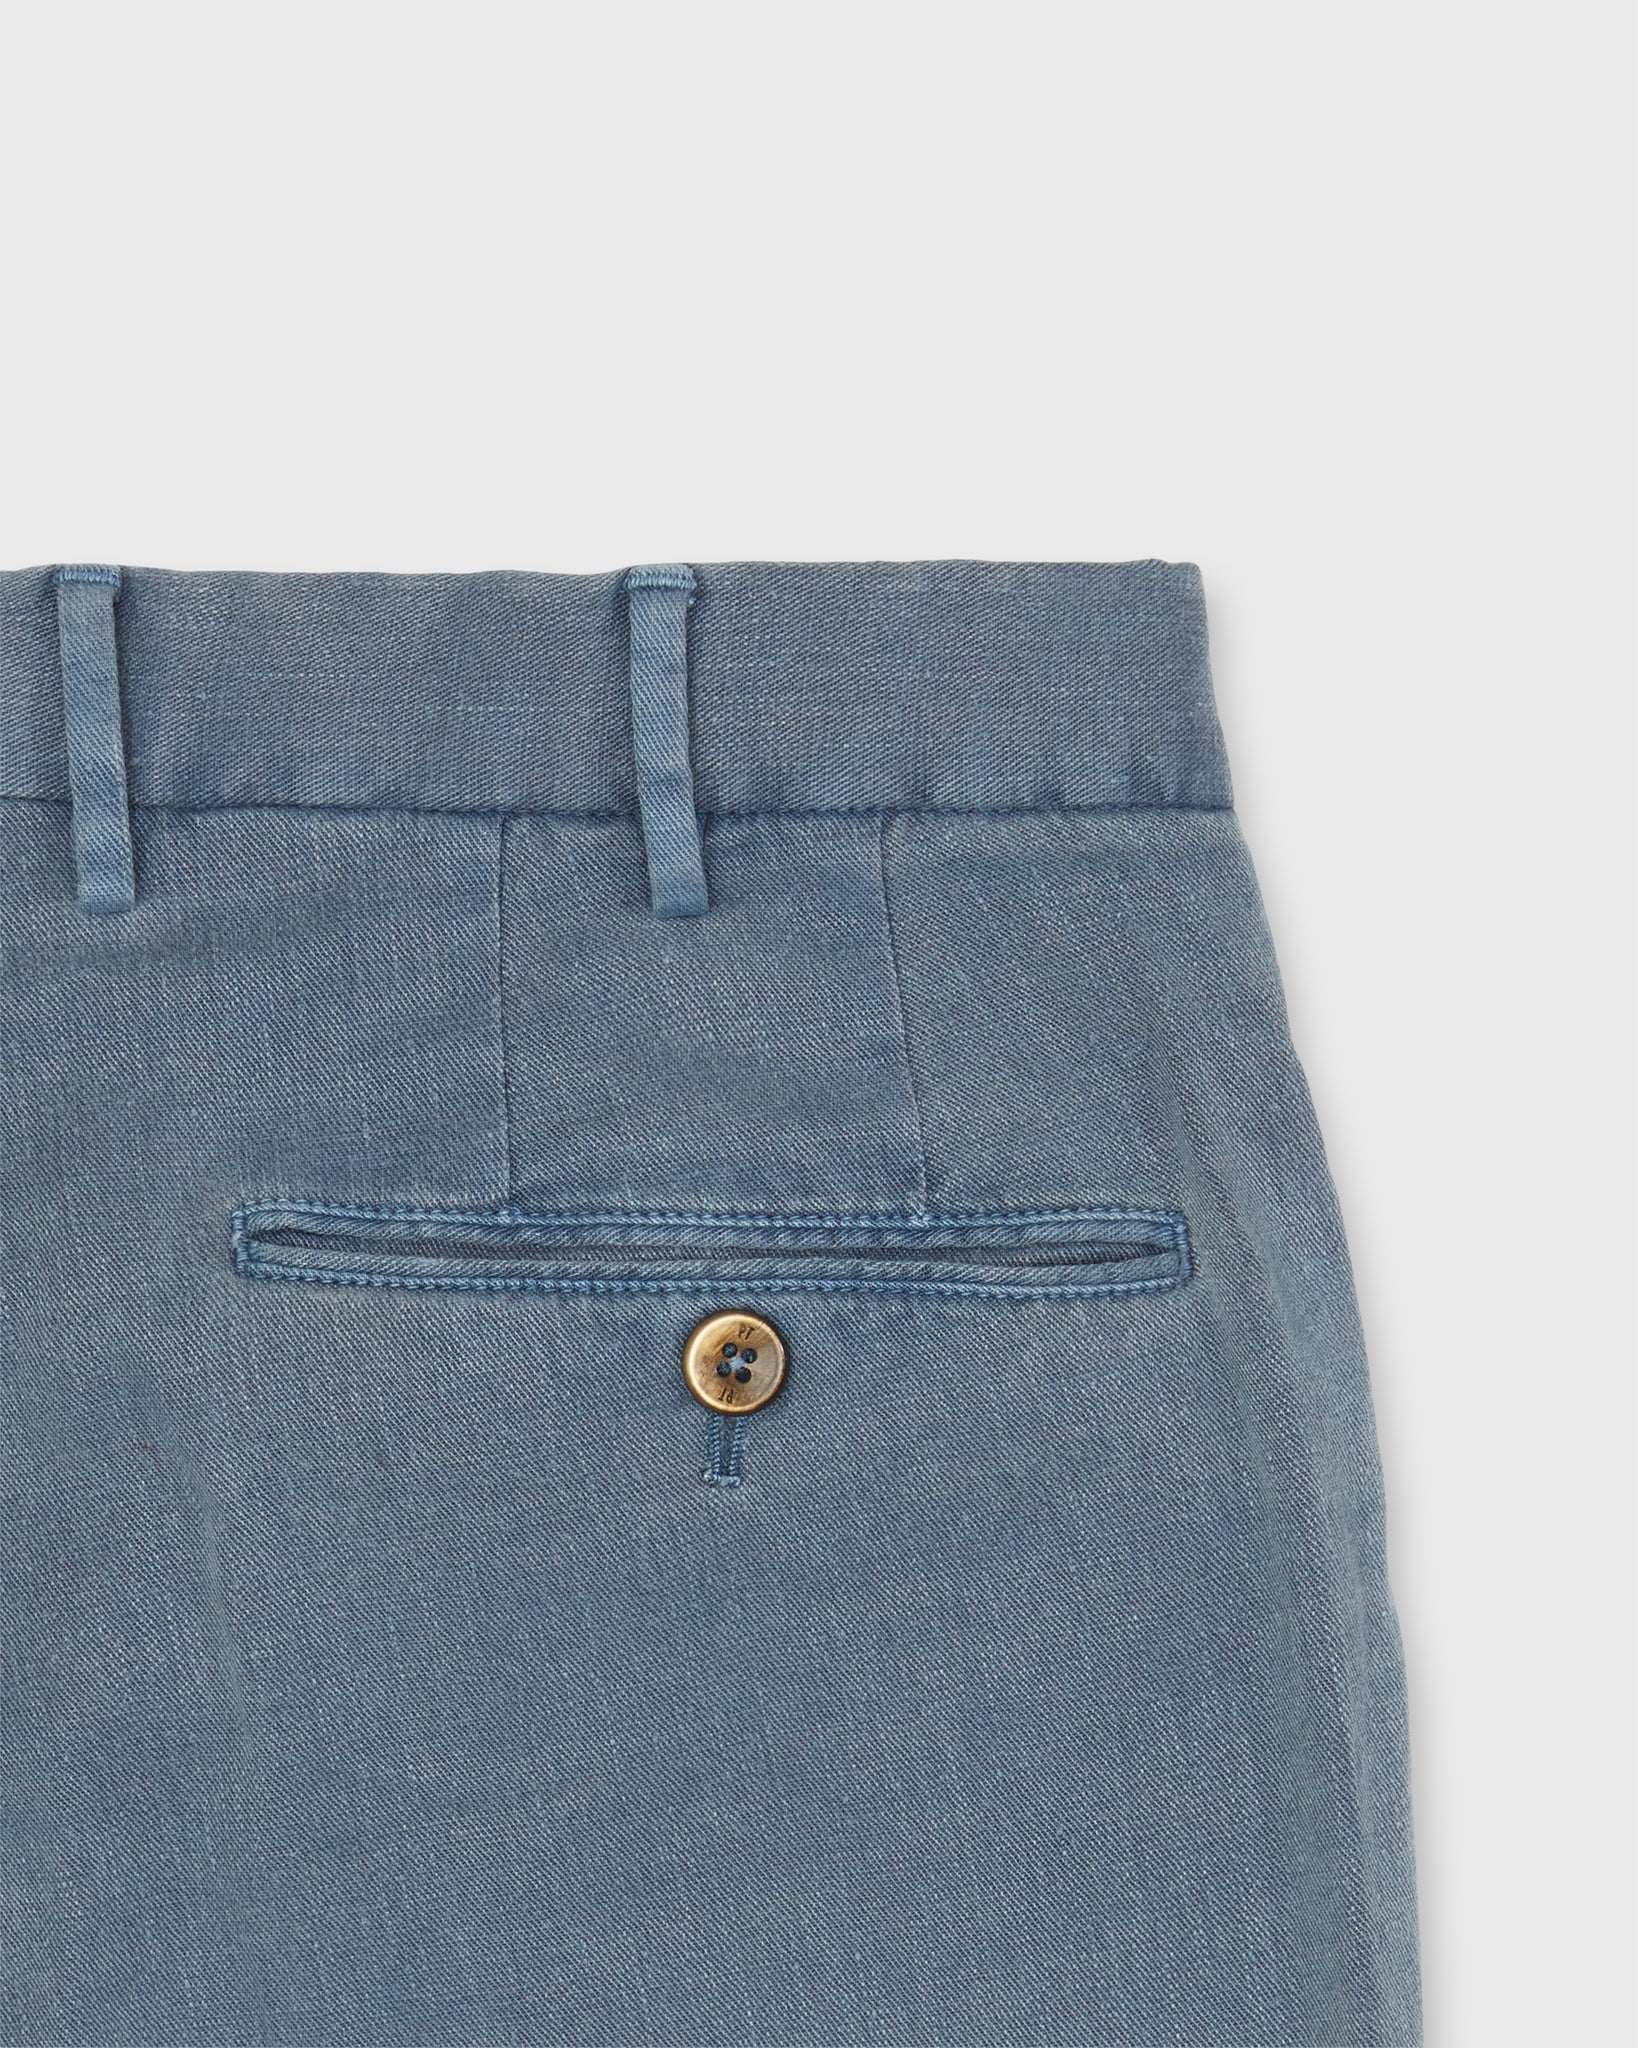 Sport Trouser in Slate Stretch Linen/Cotton